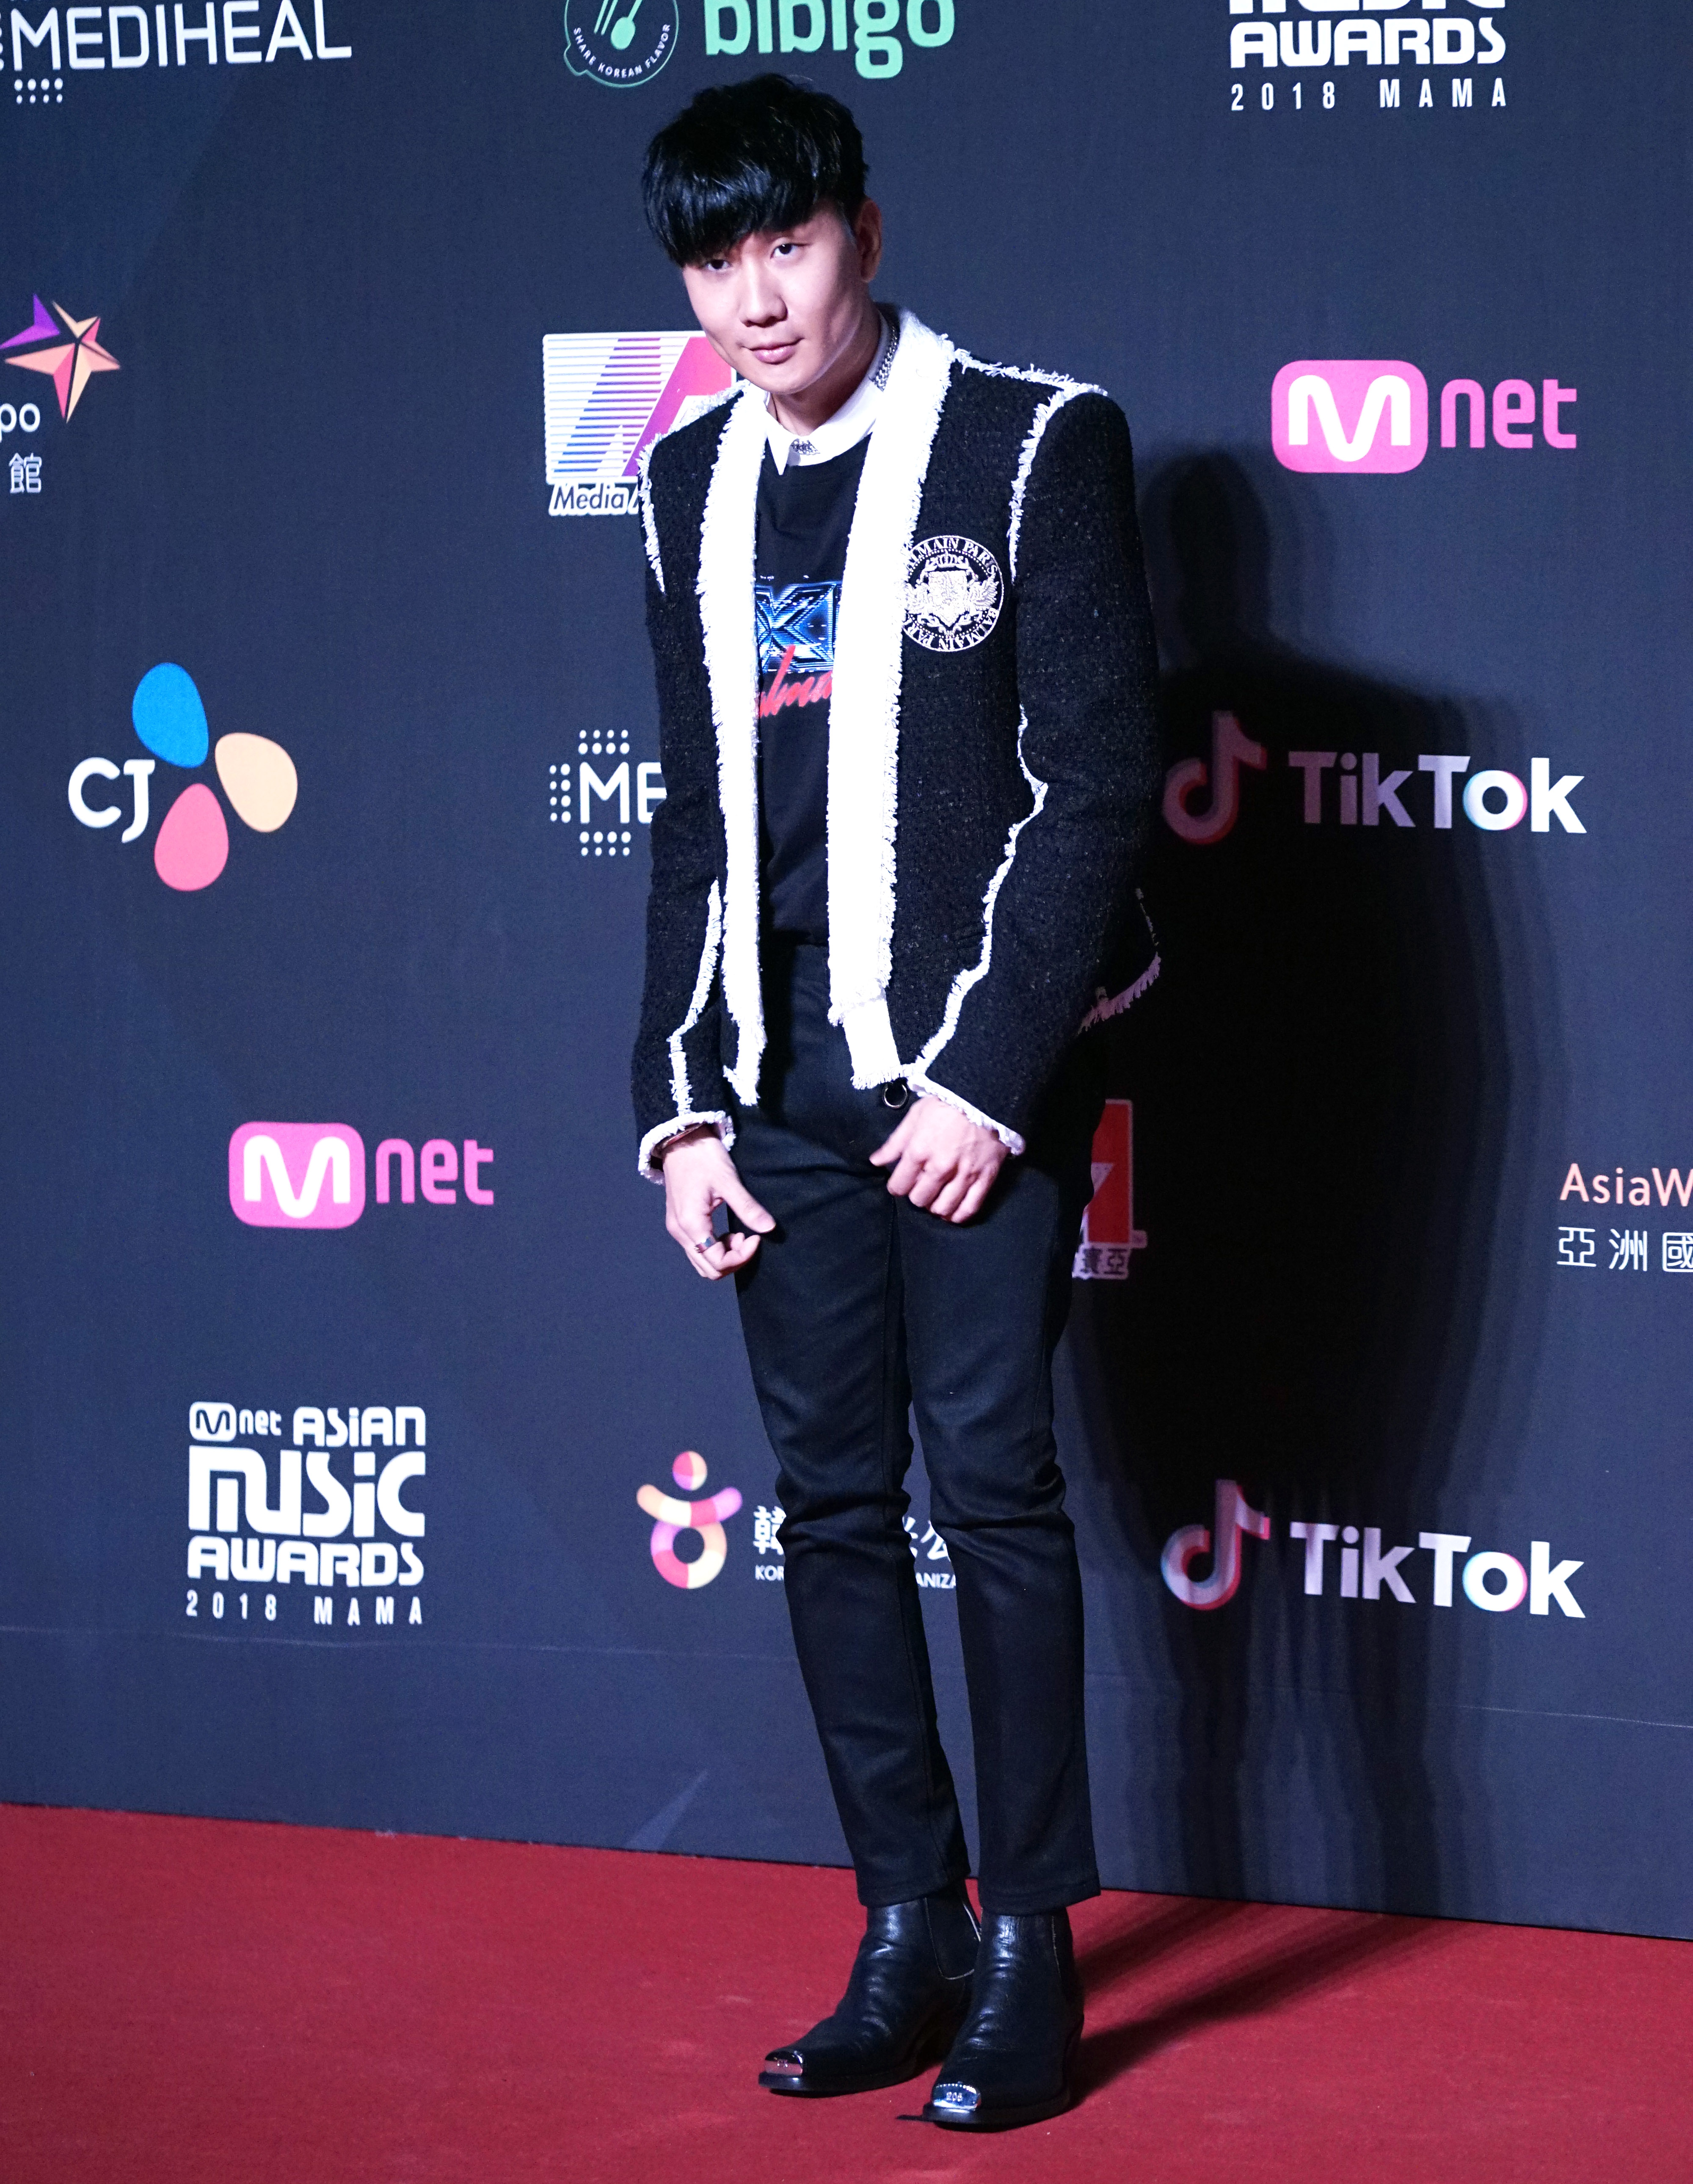 Mnet Asian Music Awards (2018)